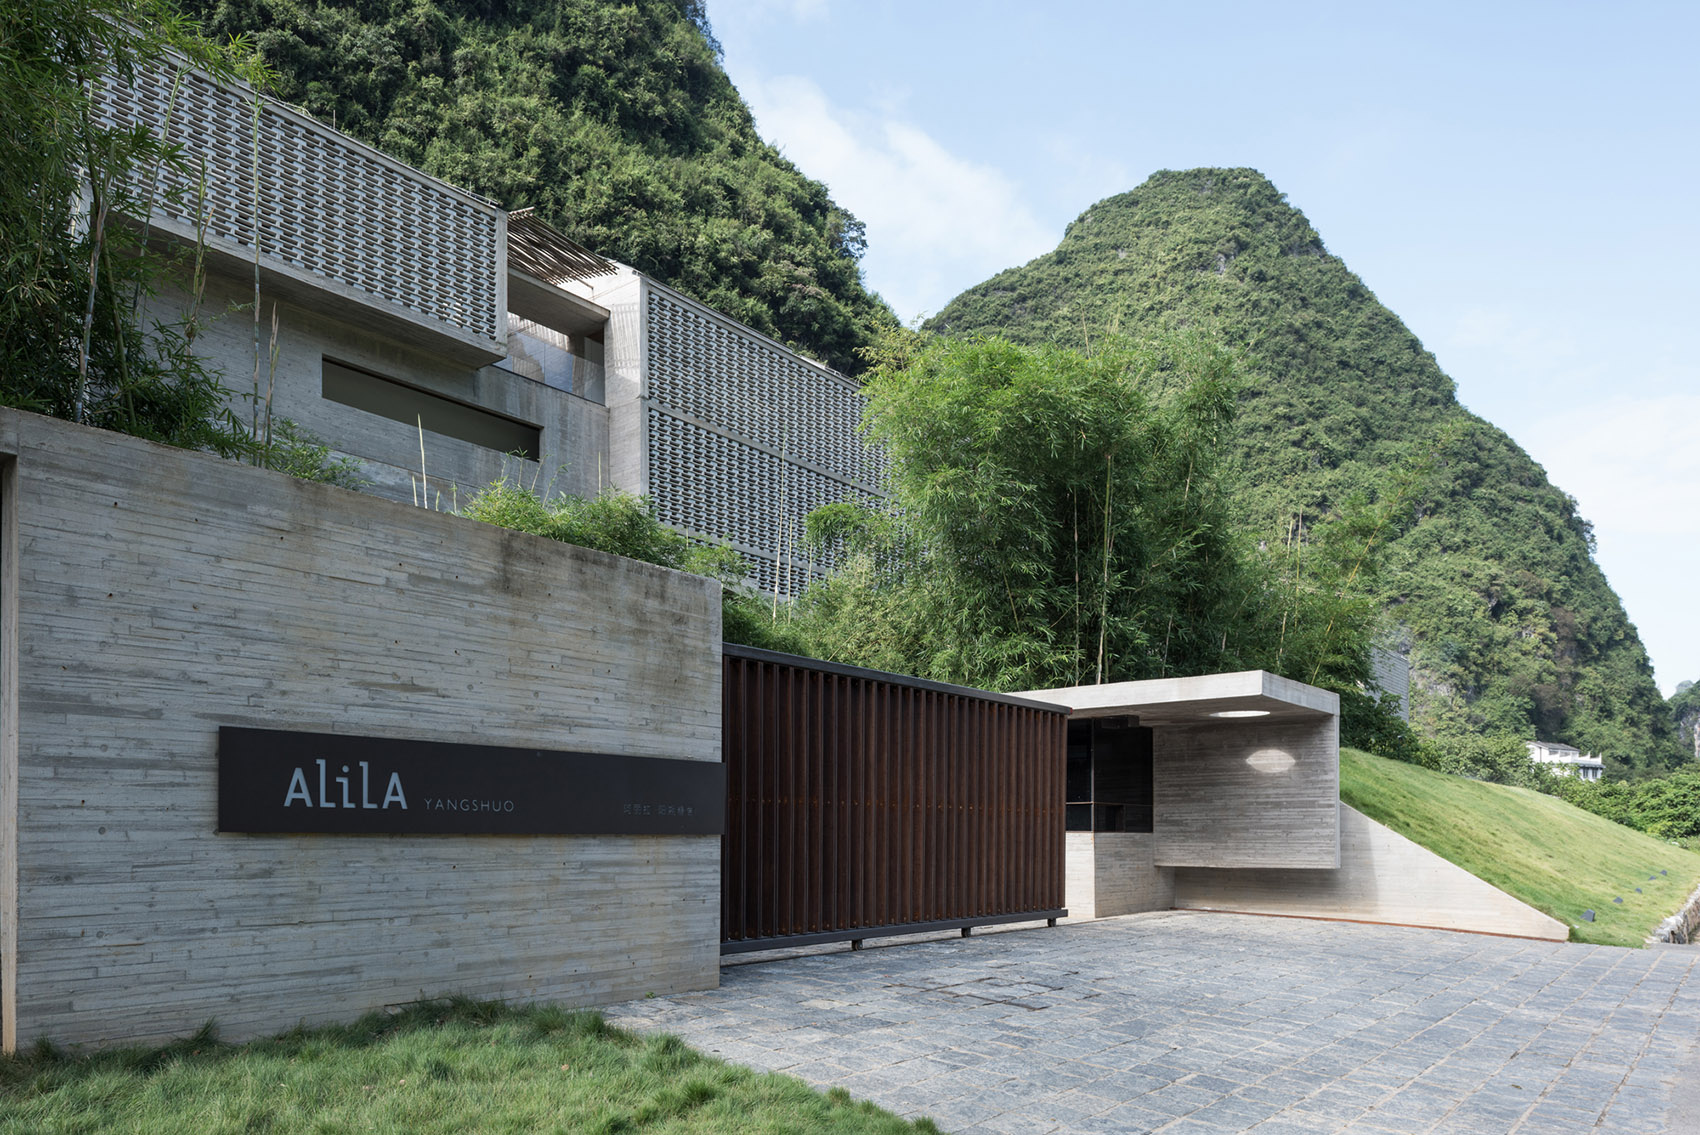 013-Alila-Yangshuo-China-by-Vector-Architects.jpg